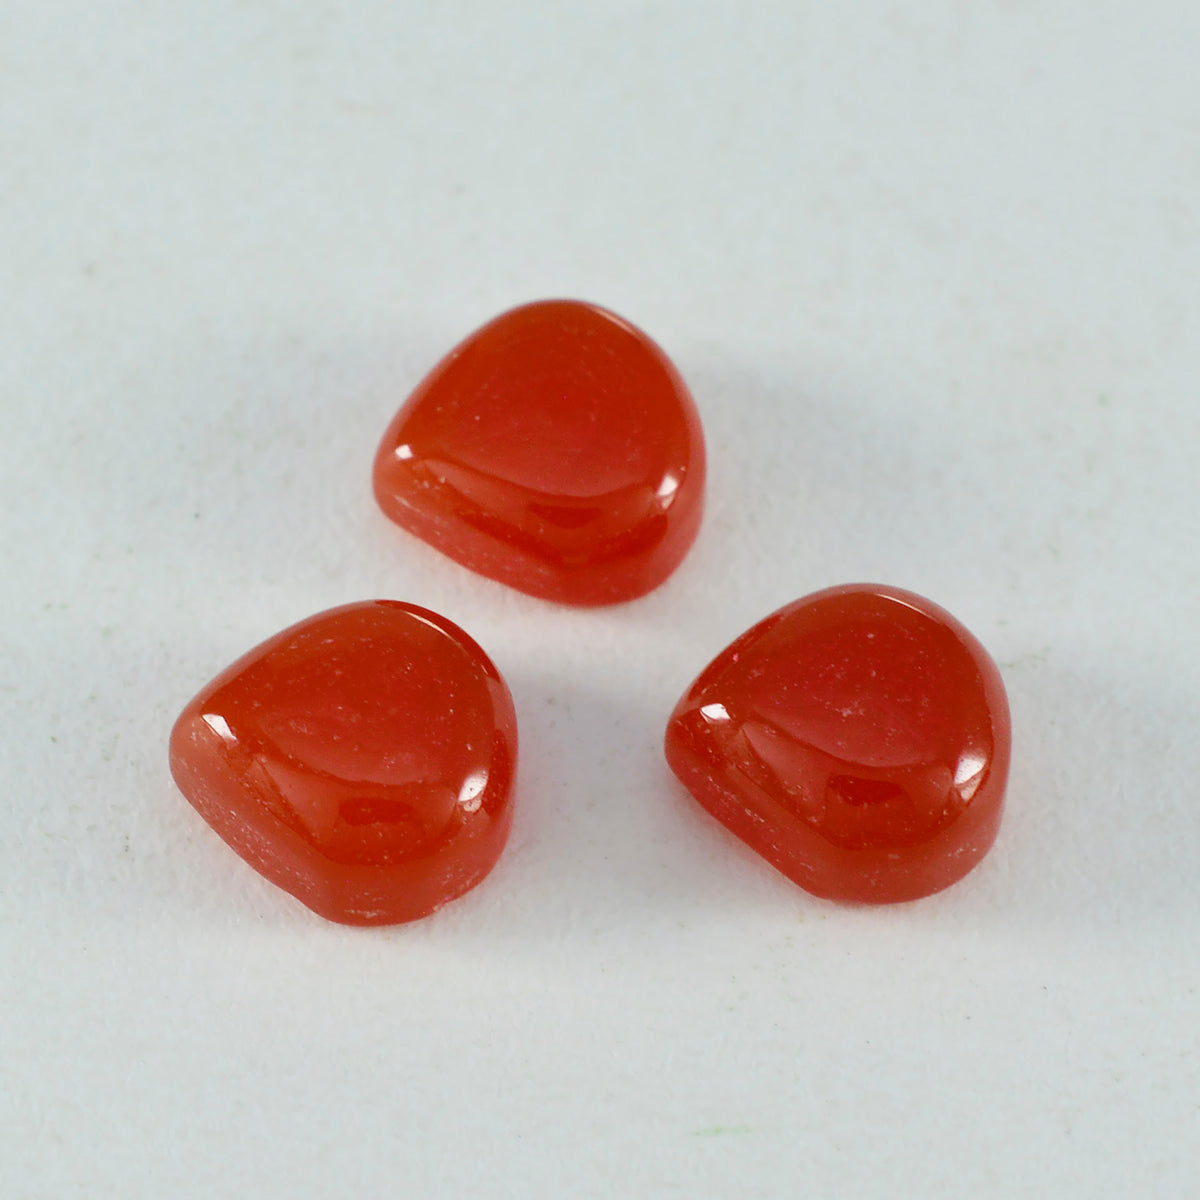 Riyogems 1PC Red Onyx Cabochon 14x14 mm Heart Shape lovely Quality Gem